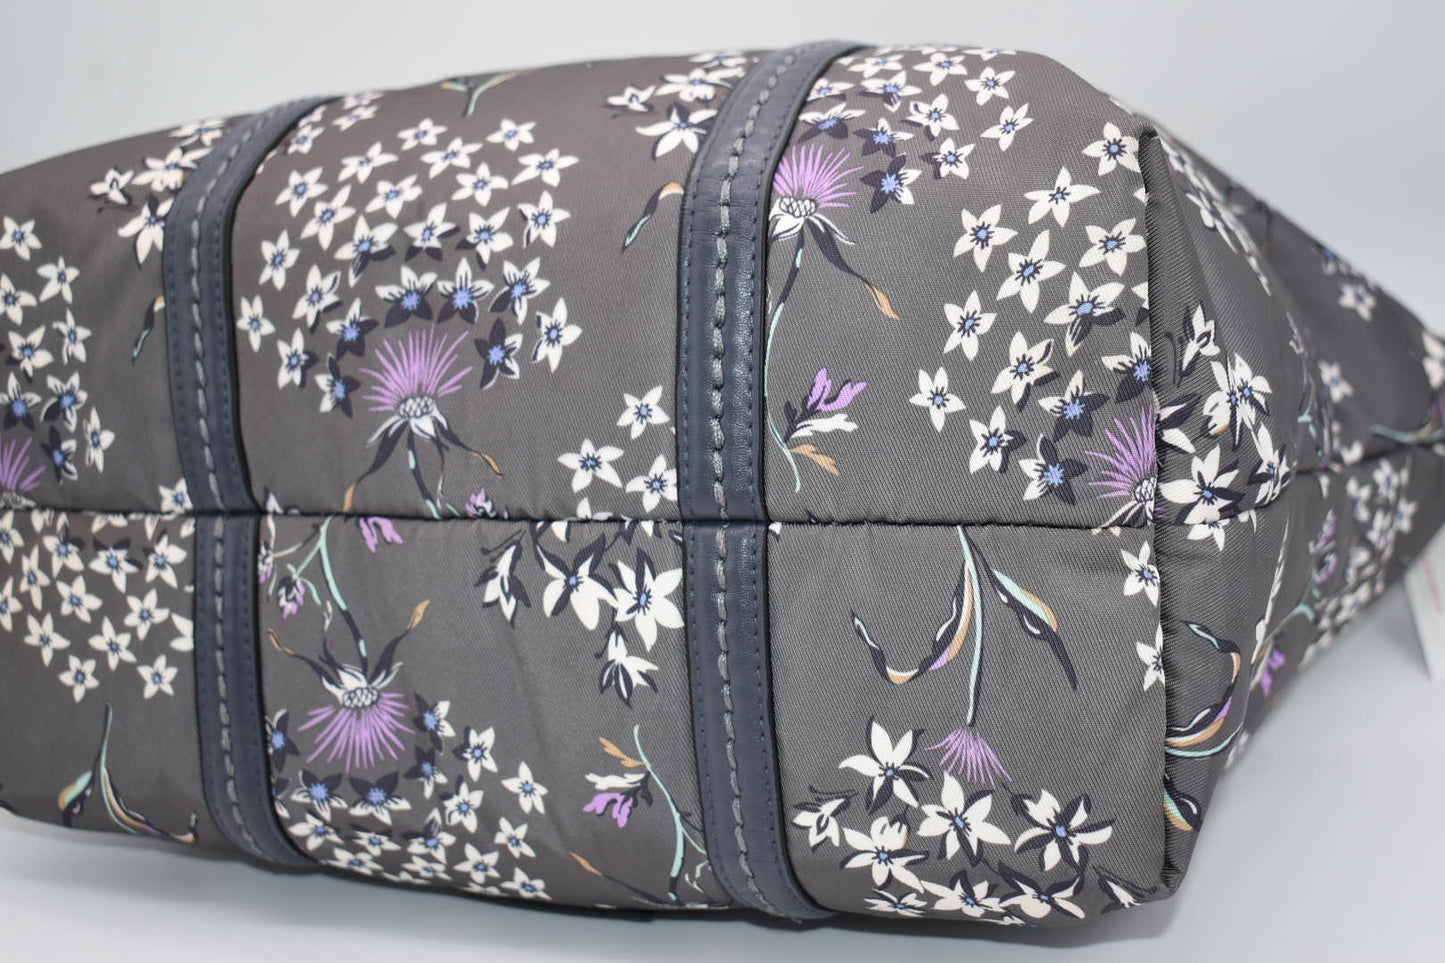 Vera Bradley Midtown Small Tote Bag in "Dandelion Wishes" Pattern